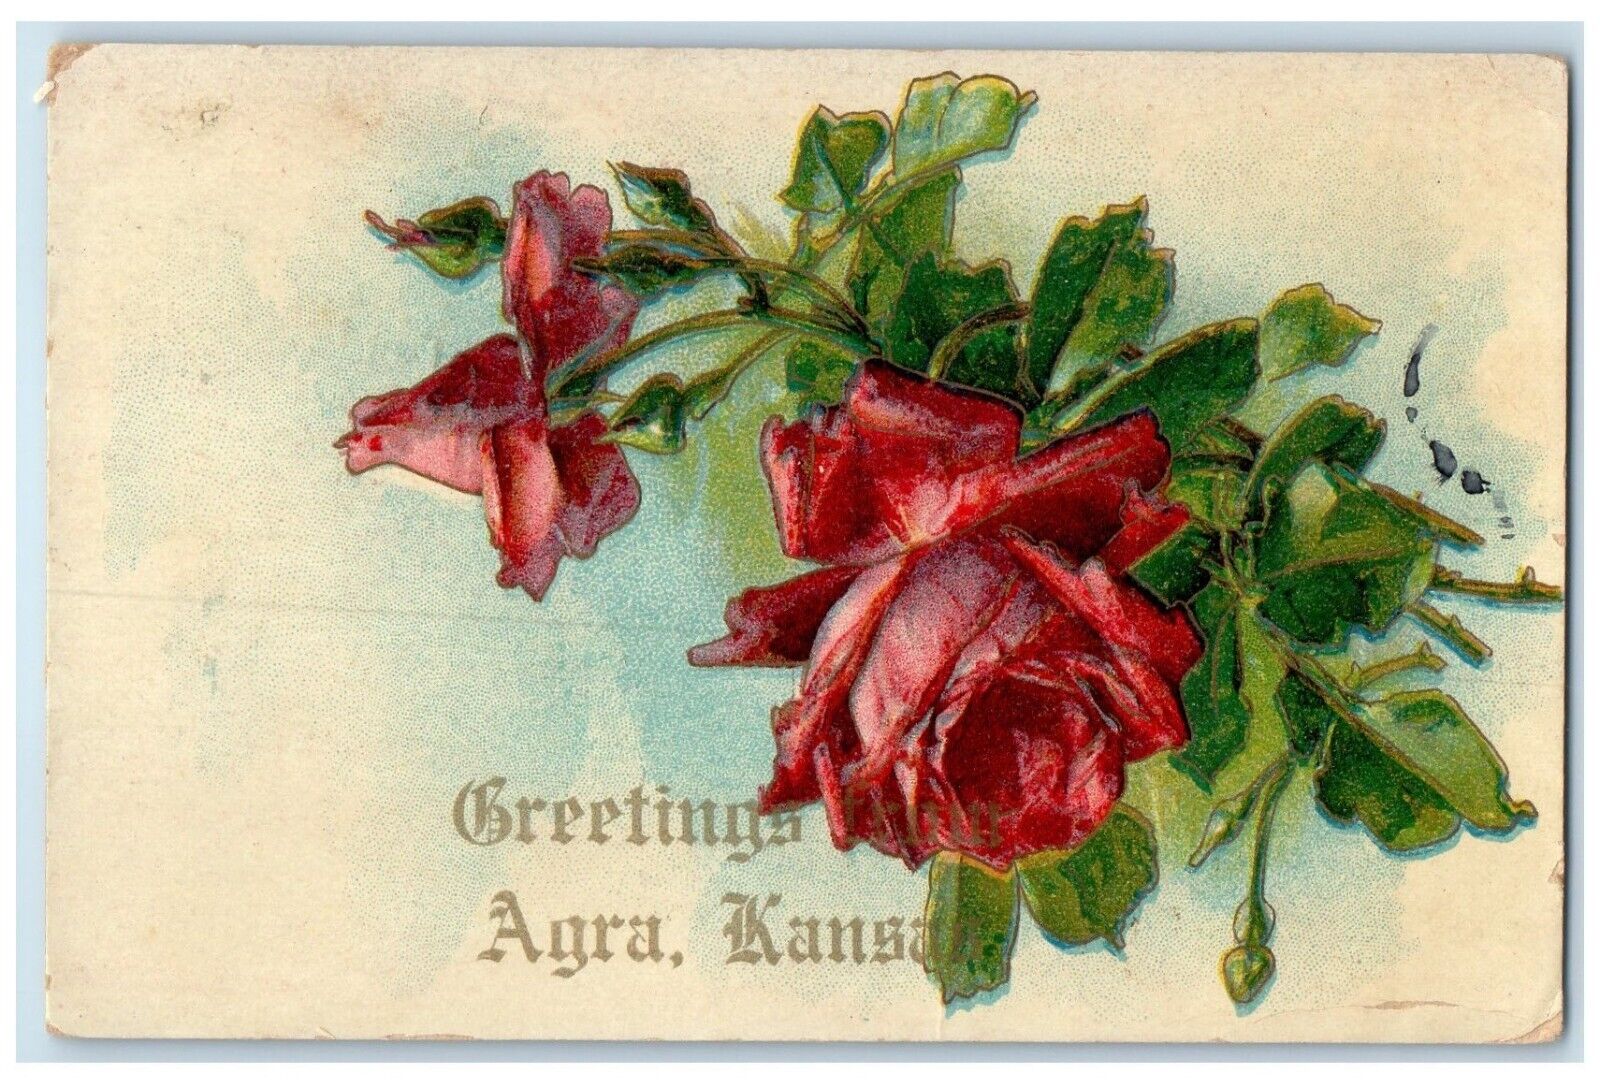 1911 Greetings From Agra Kansas KS Flowers Leaves Roses Vintage Antique Postcard